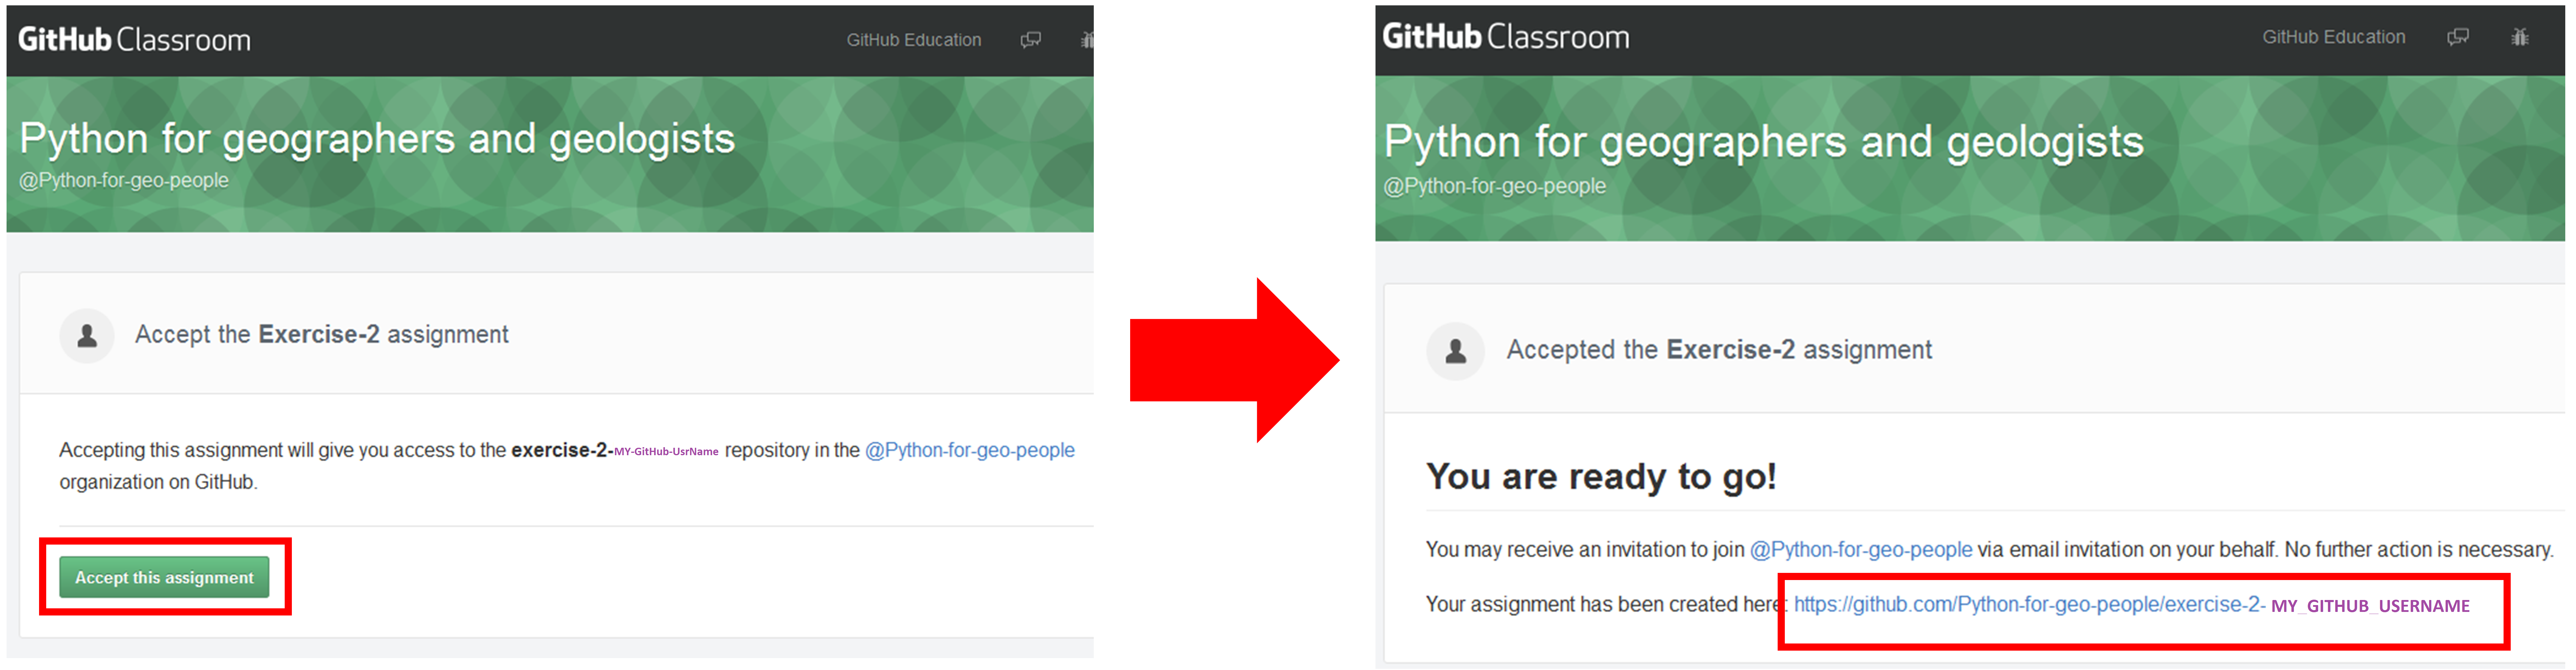 Accept GitHub classroom invitation